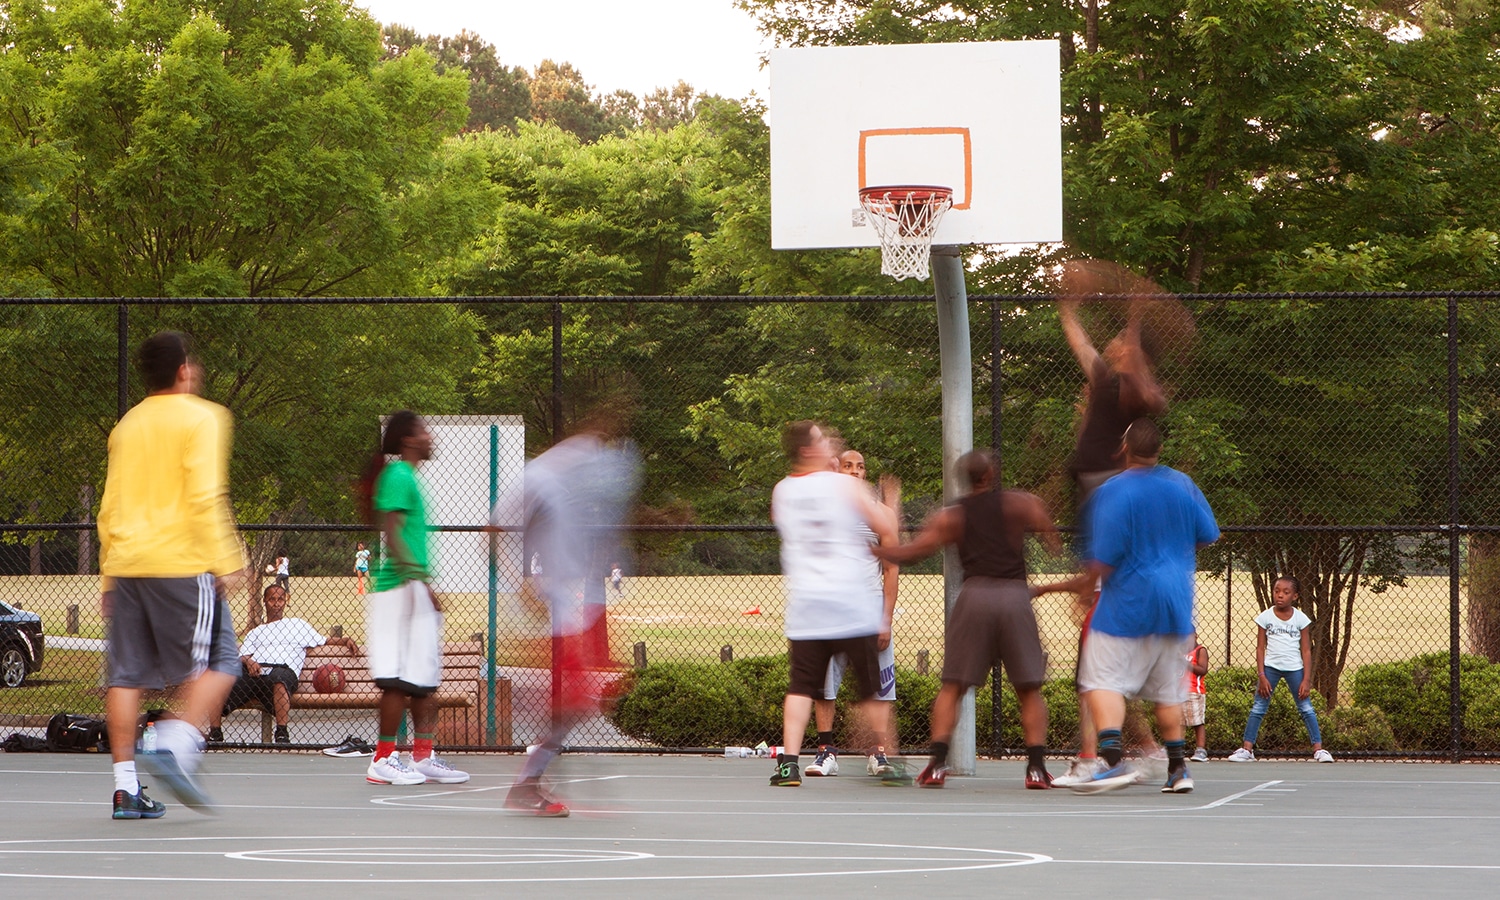 Gospel Sweet Spot | The Navigators Collegiate Ministry | Motion Blur Of Men Playing Pickup Basketball On Playground Court